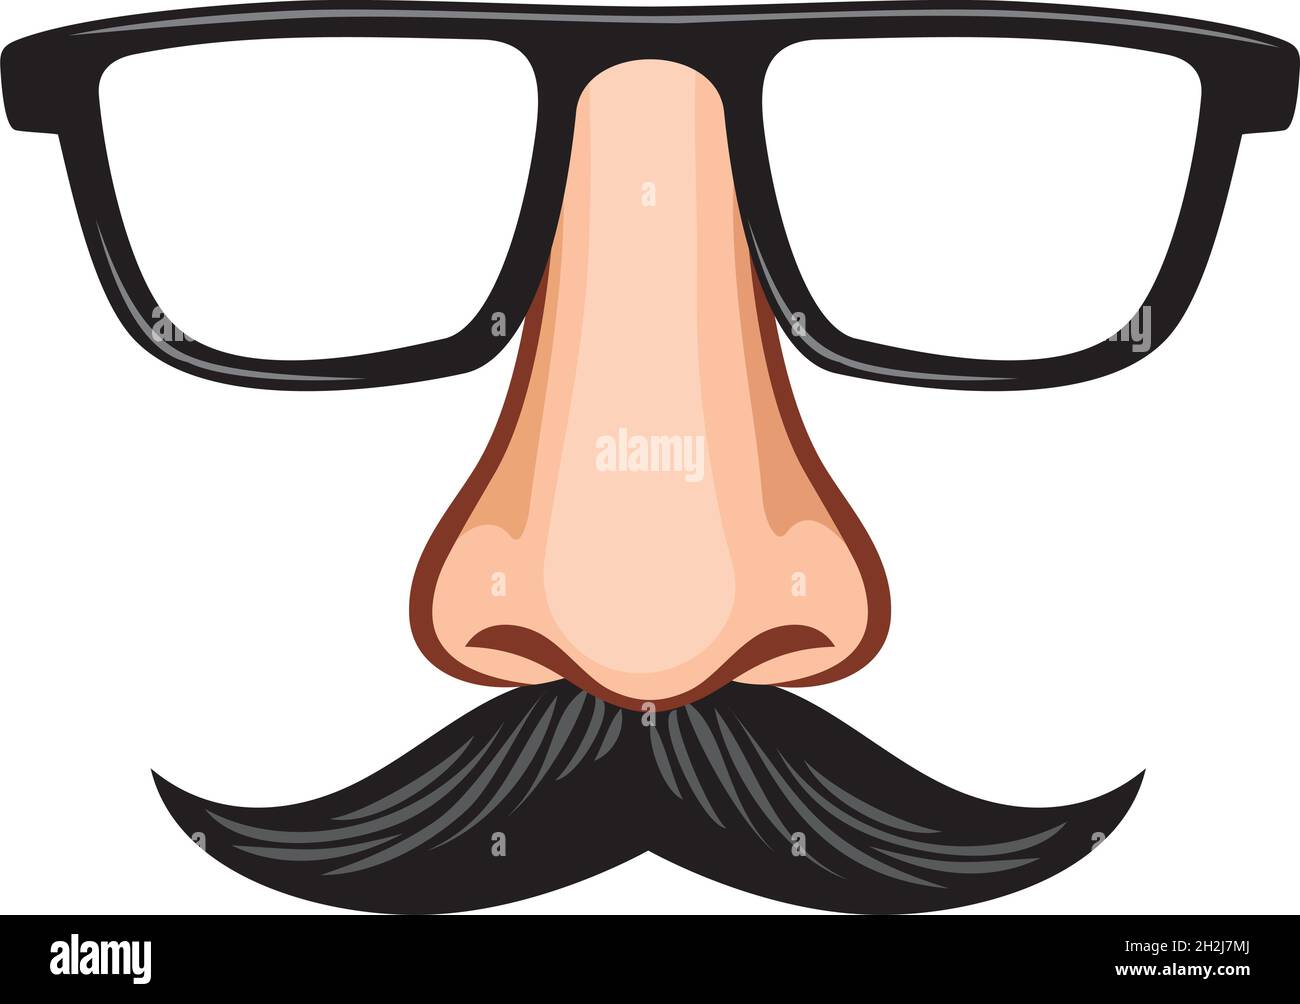 Gafas falsas nariz bigote fotografías e imágenes de alta resolución - Alamy